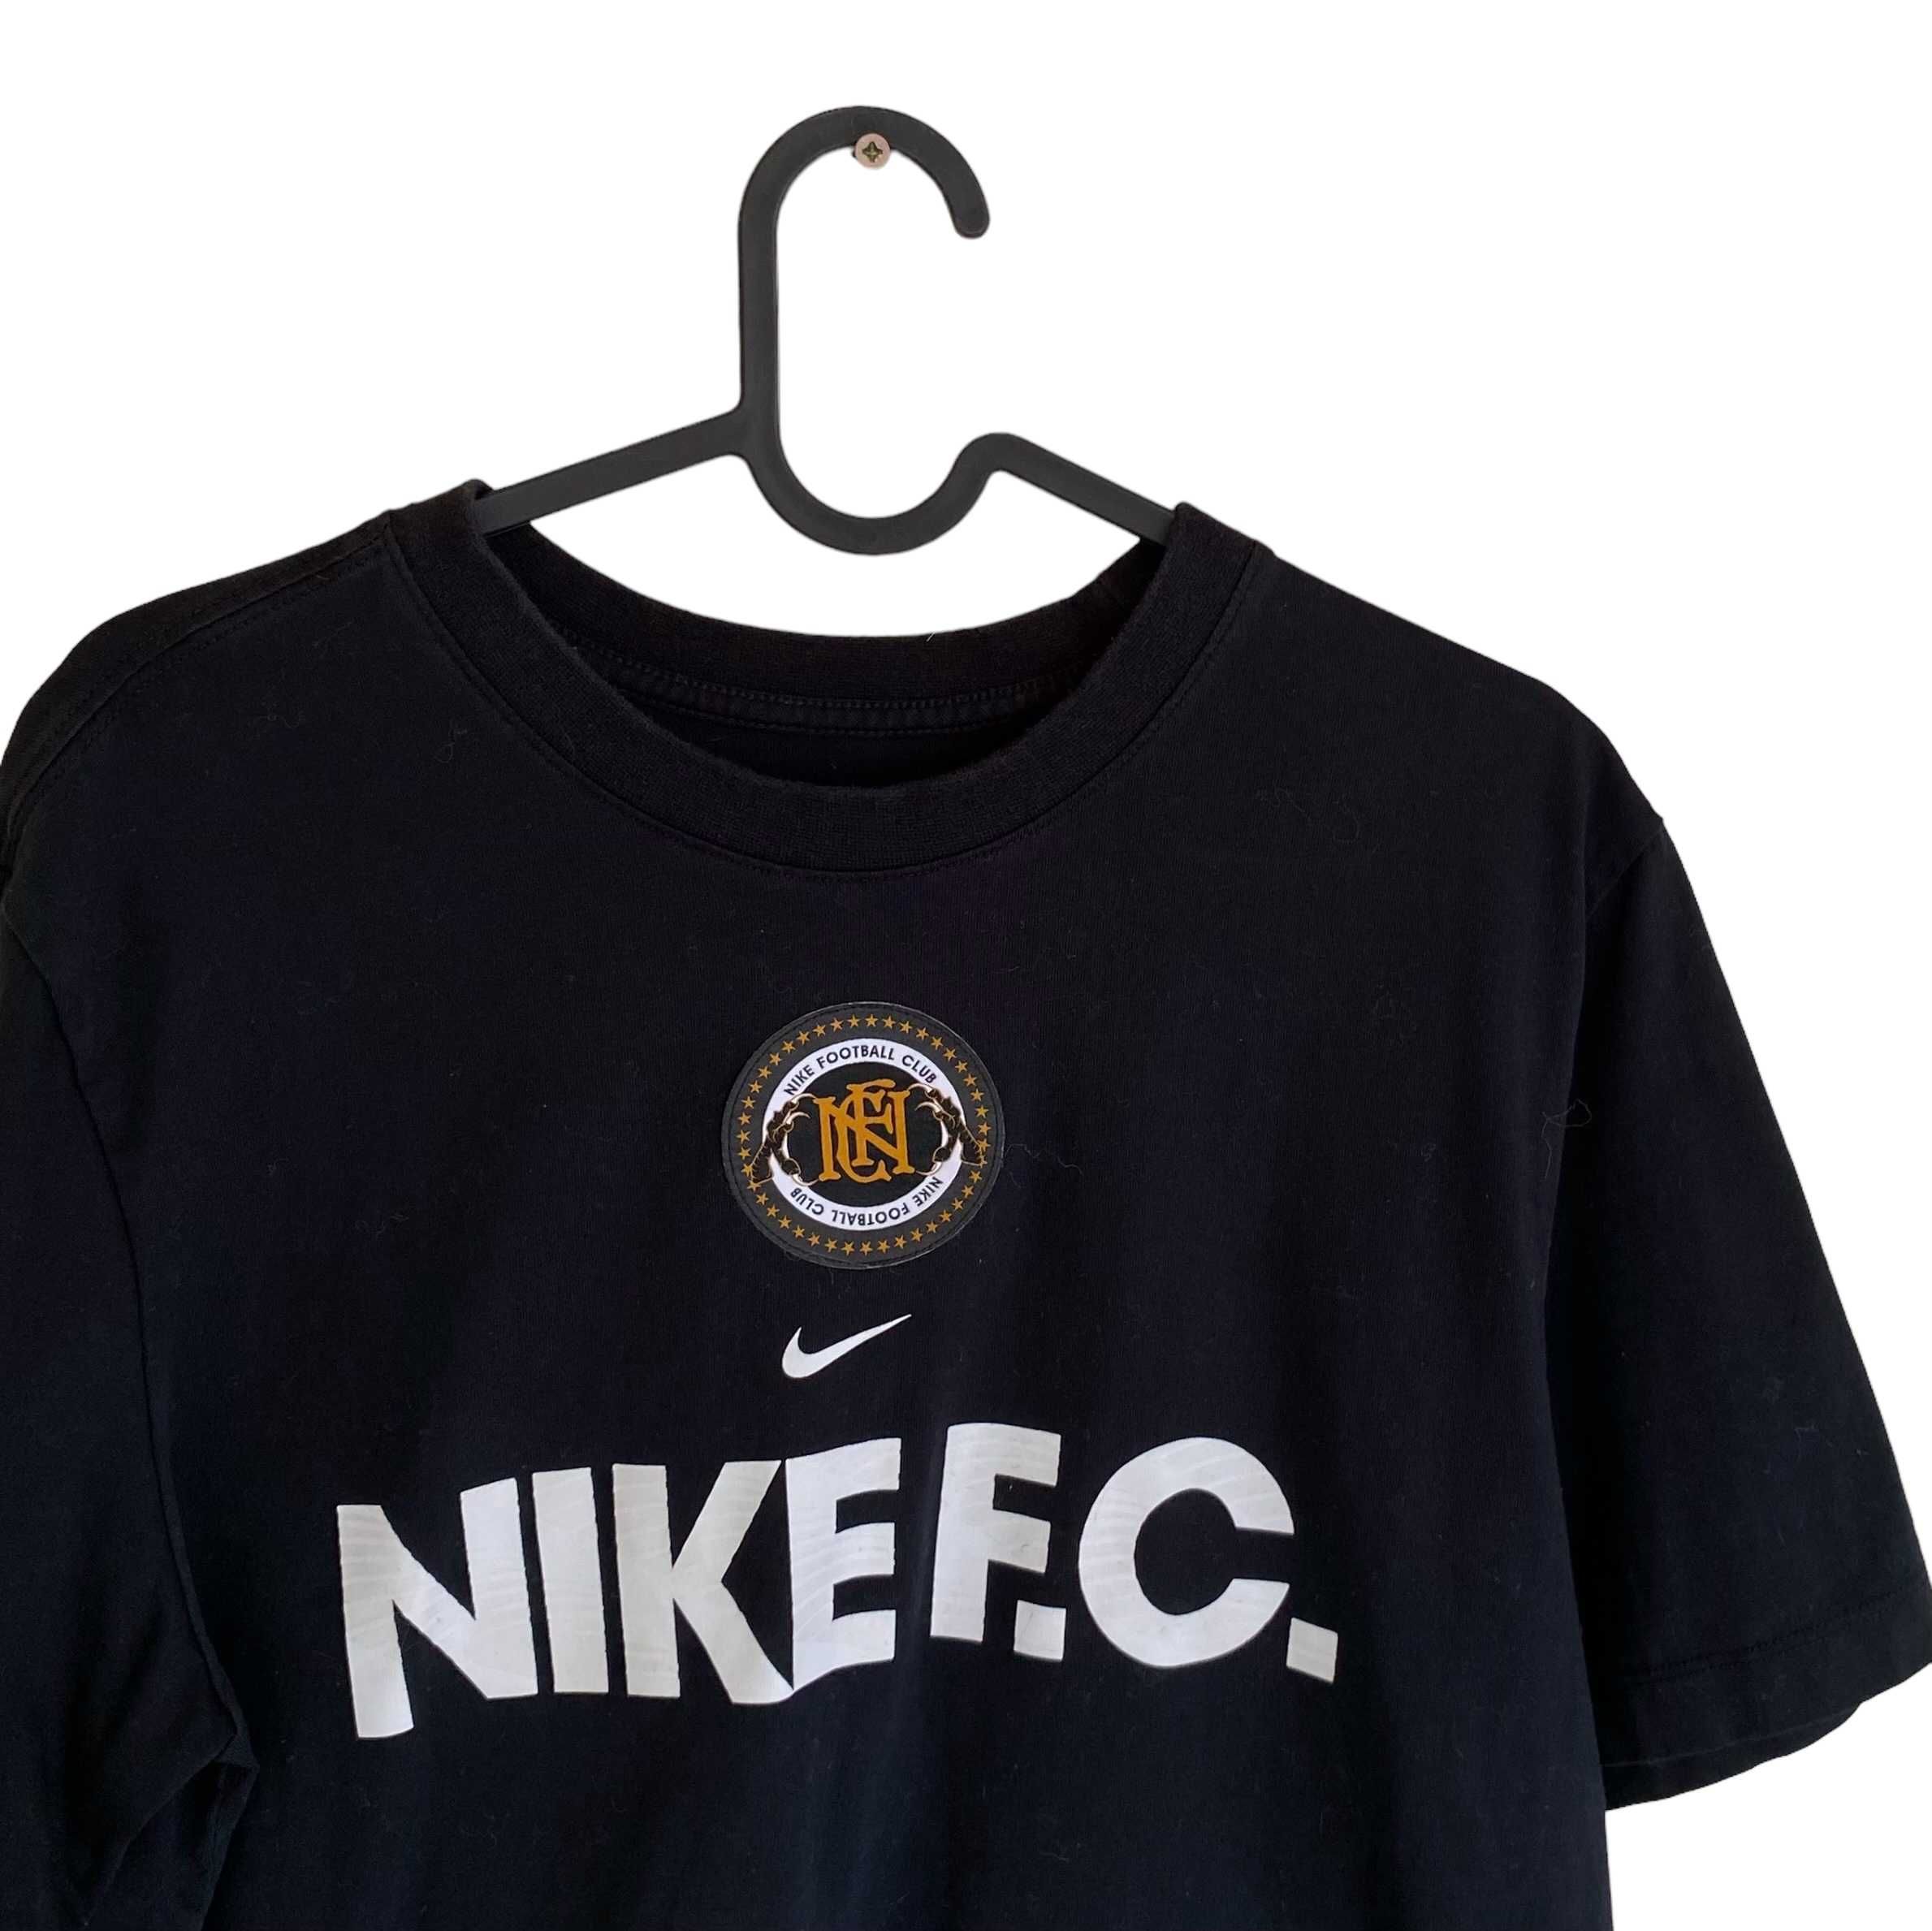 Nike FC t-shirt, rozmiar M, stan bardzo dobry